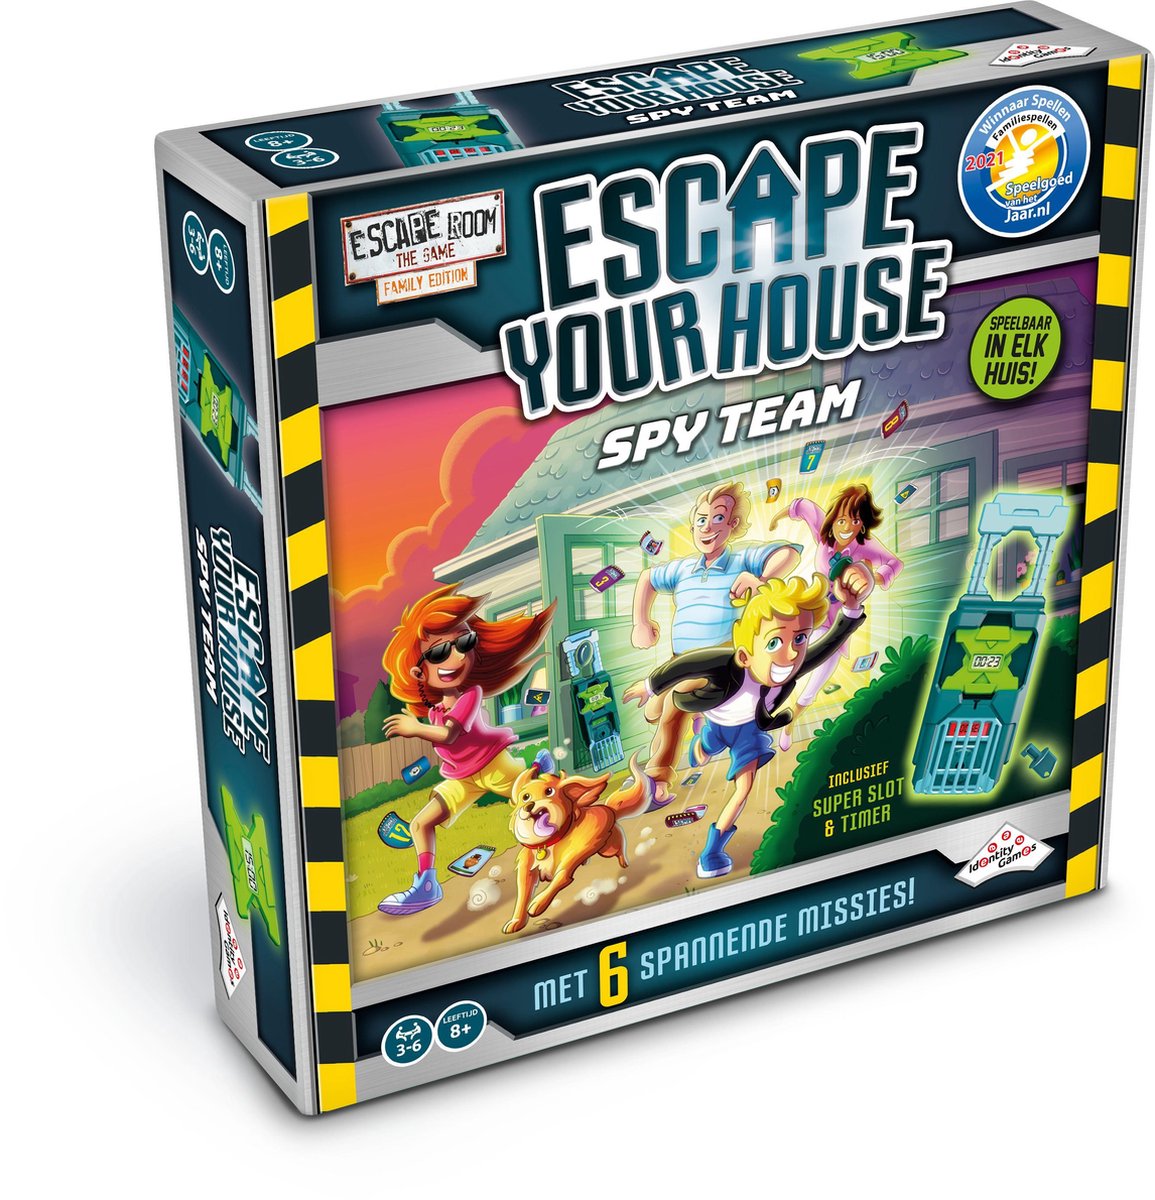 Escape Room: The Game - Escape Your House